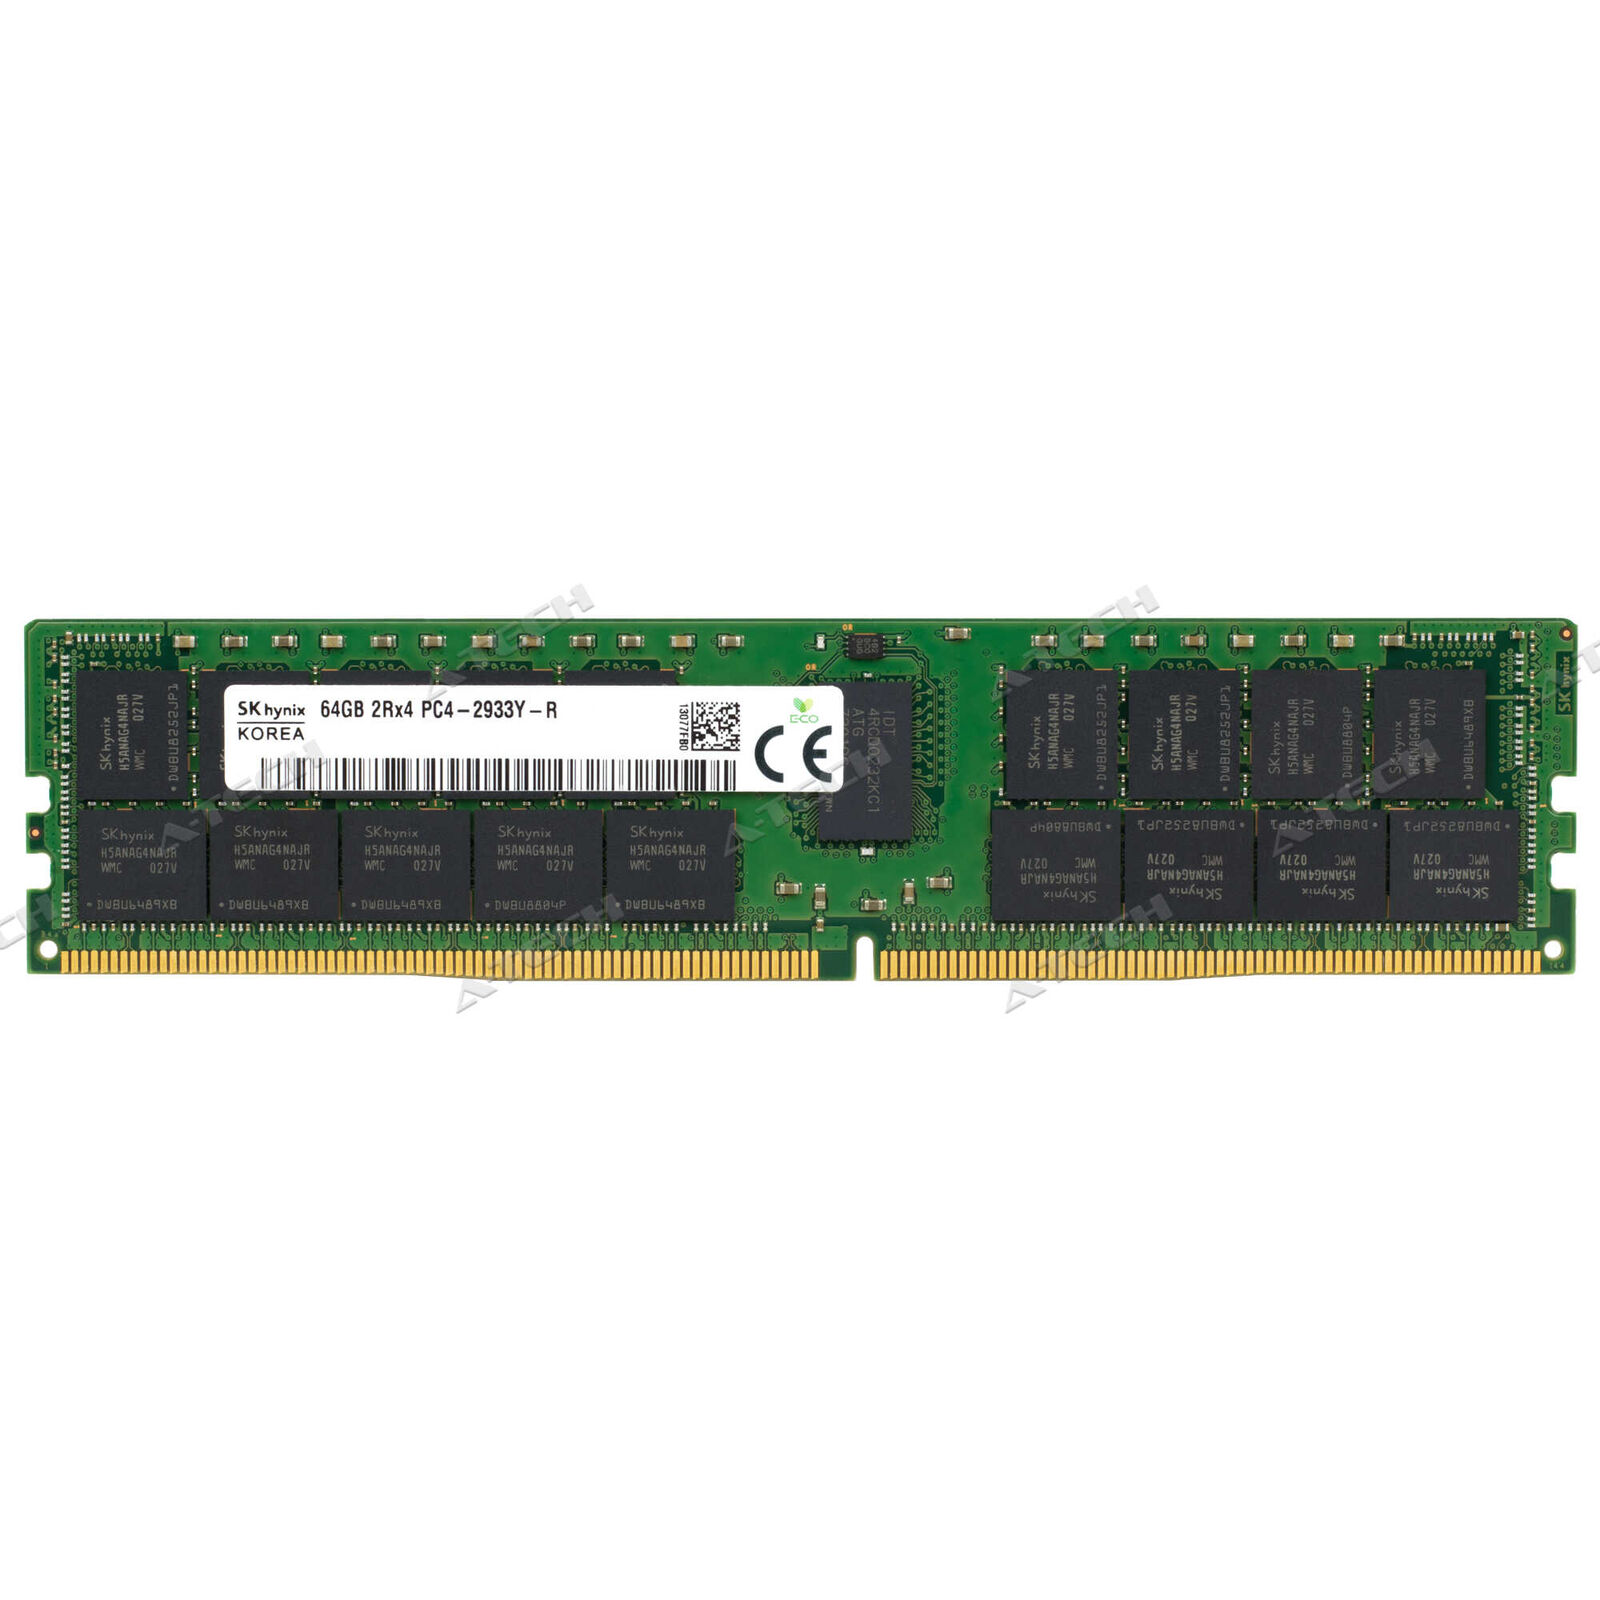 Hynix 64GB DDR4-2933 RDIMM HMAA8GR7AJR4N-WM HMAA8GR7MJR4N-WM Server Memory RAM